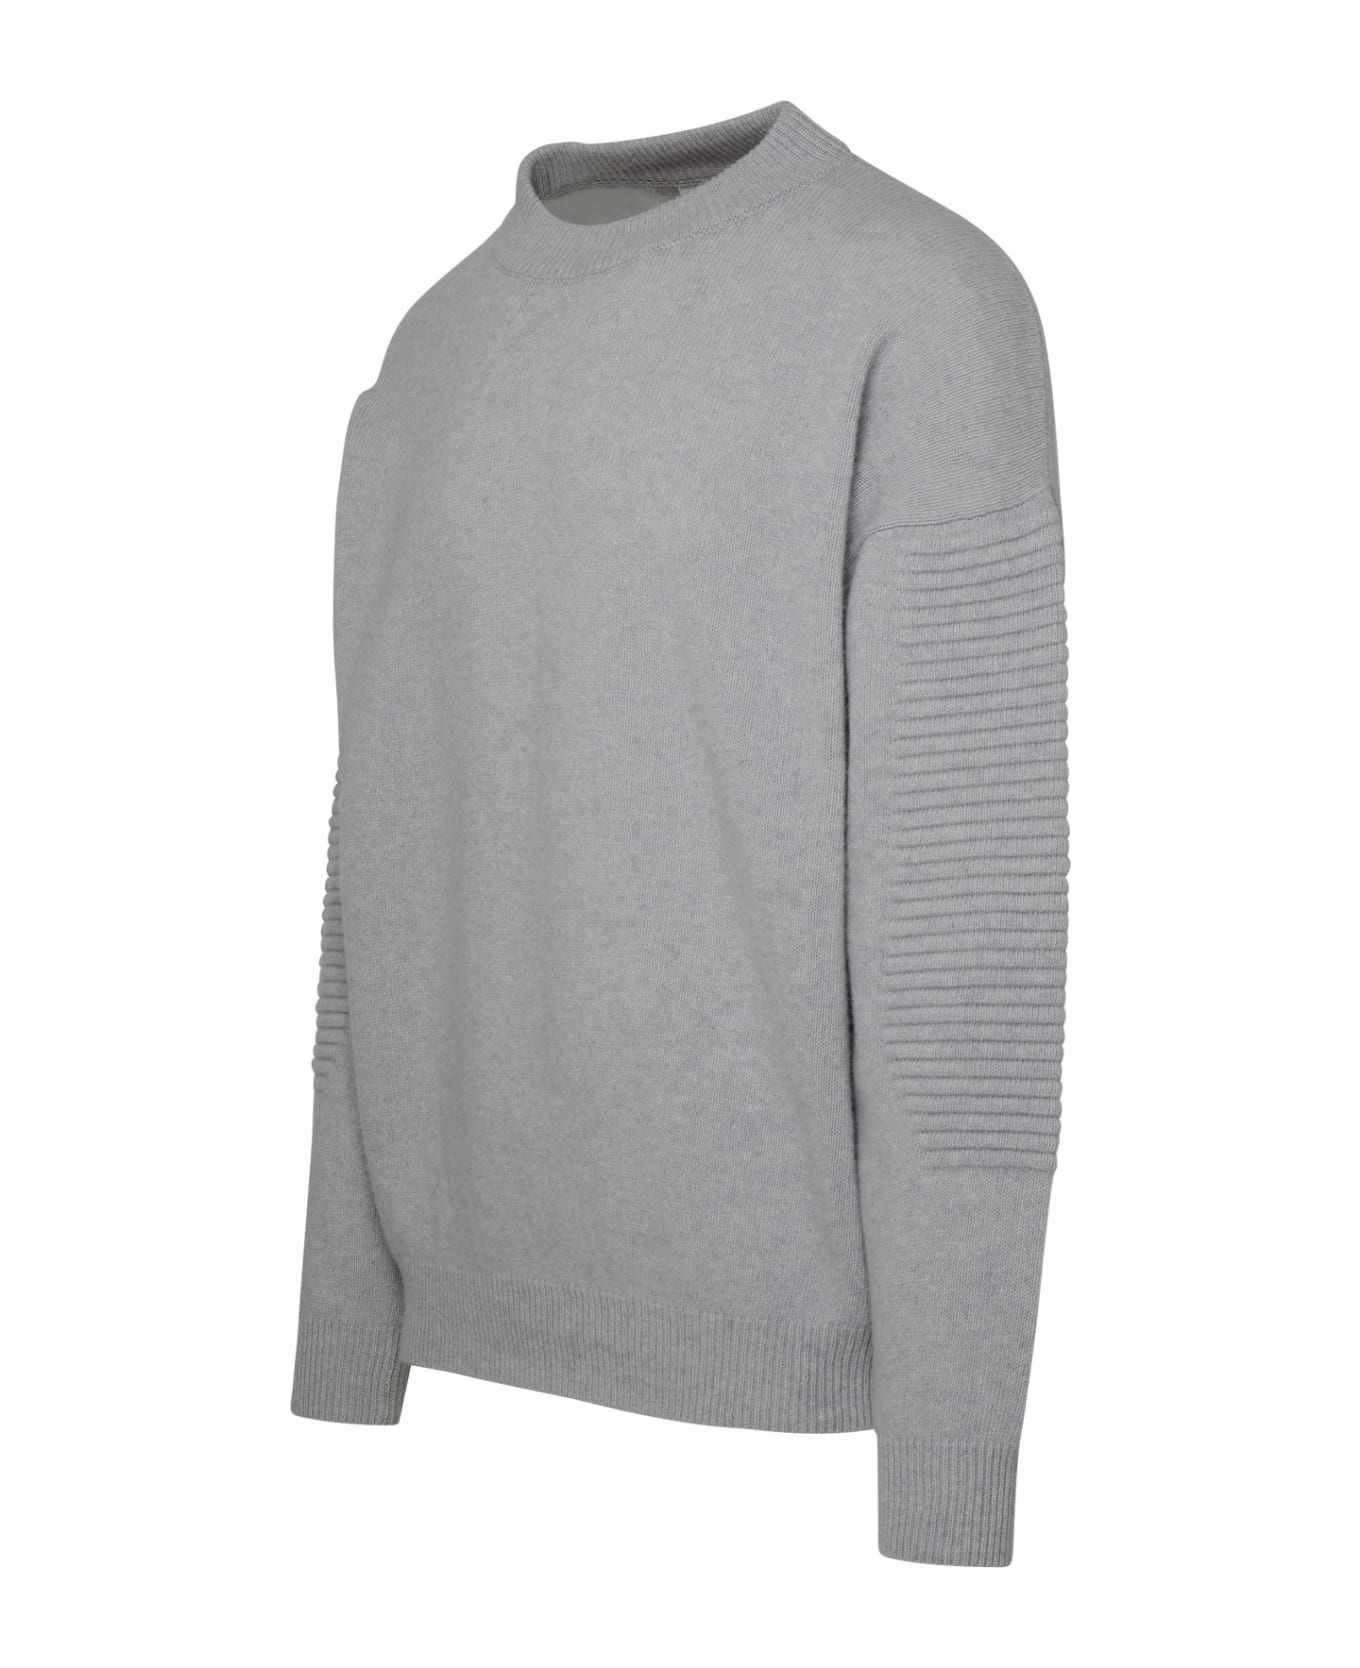 Ferrari Grey Cashmere Blend Sweater - Grey